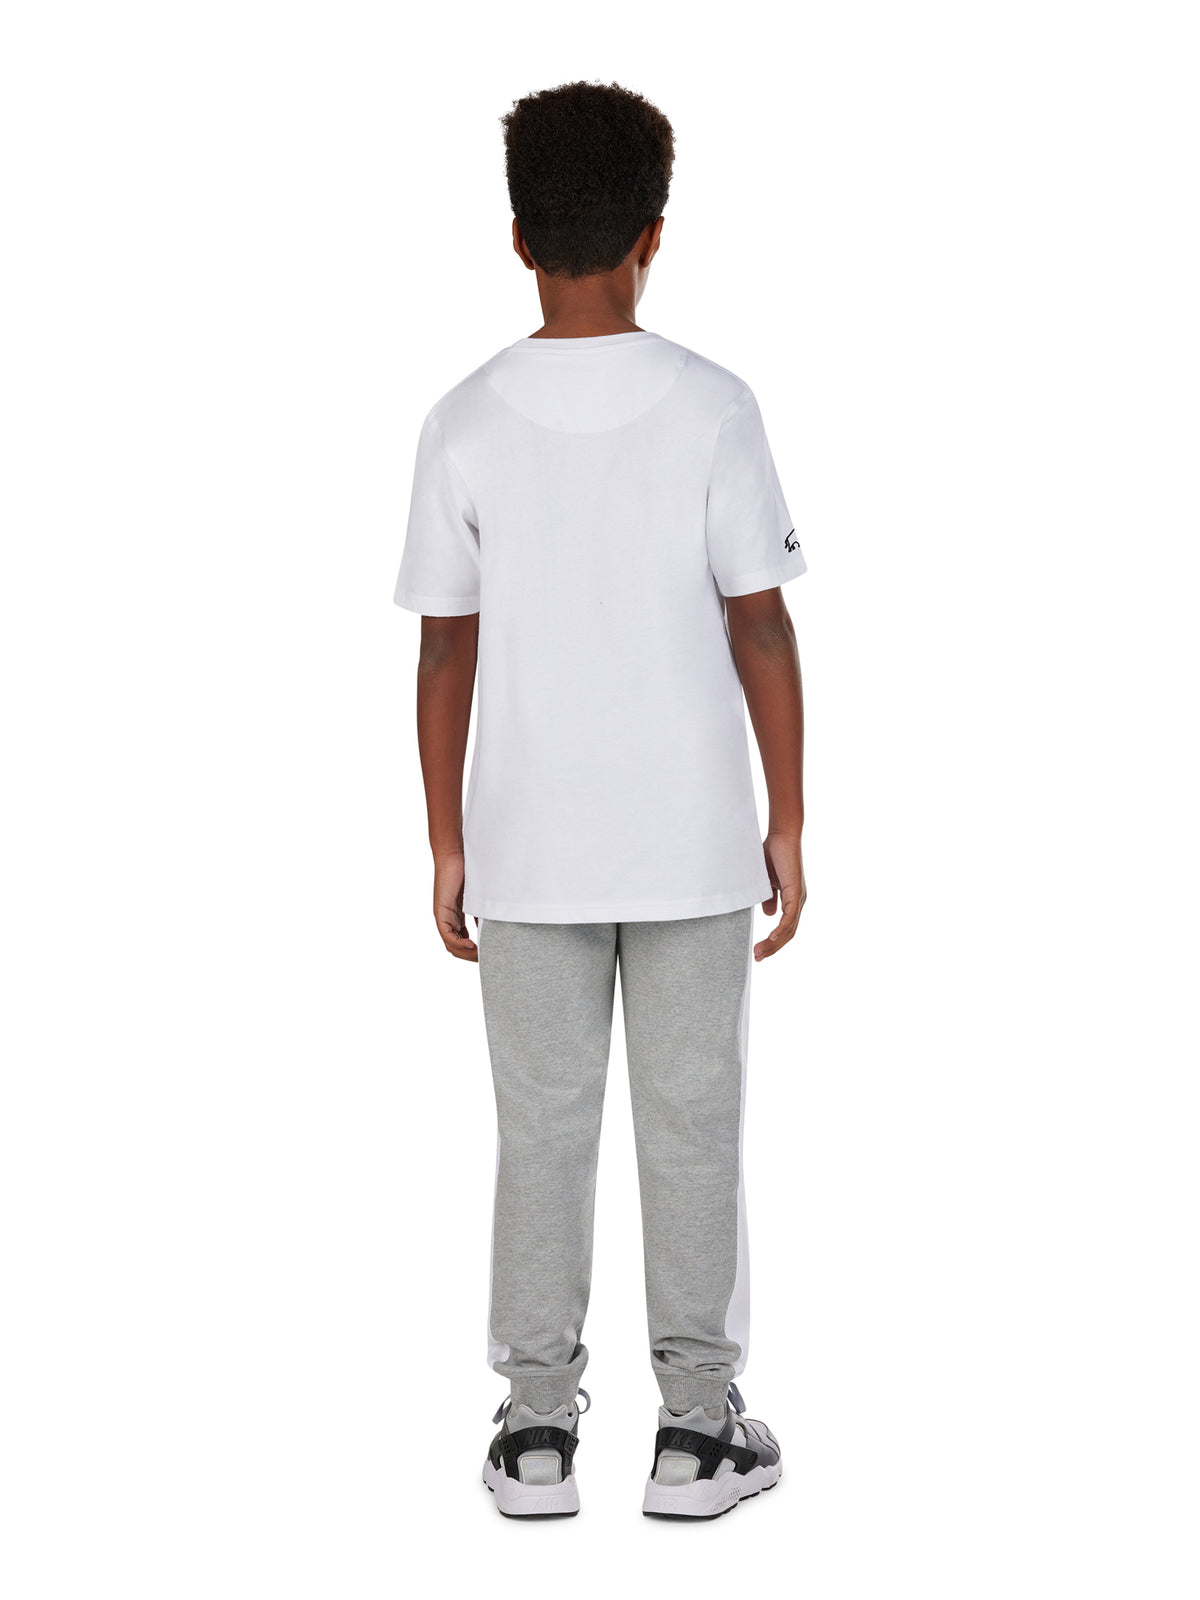 RB International T-Shirt - White